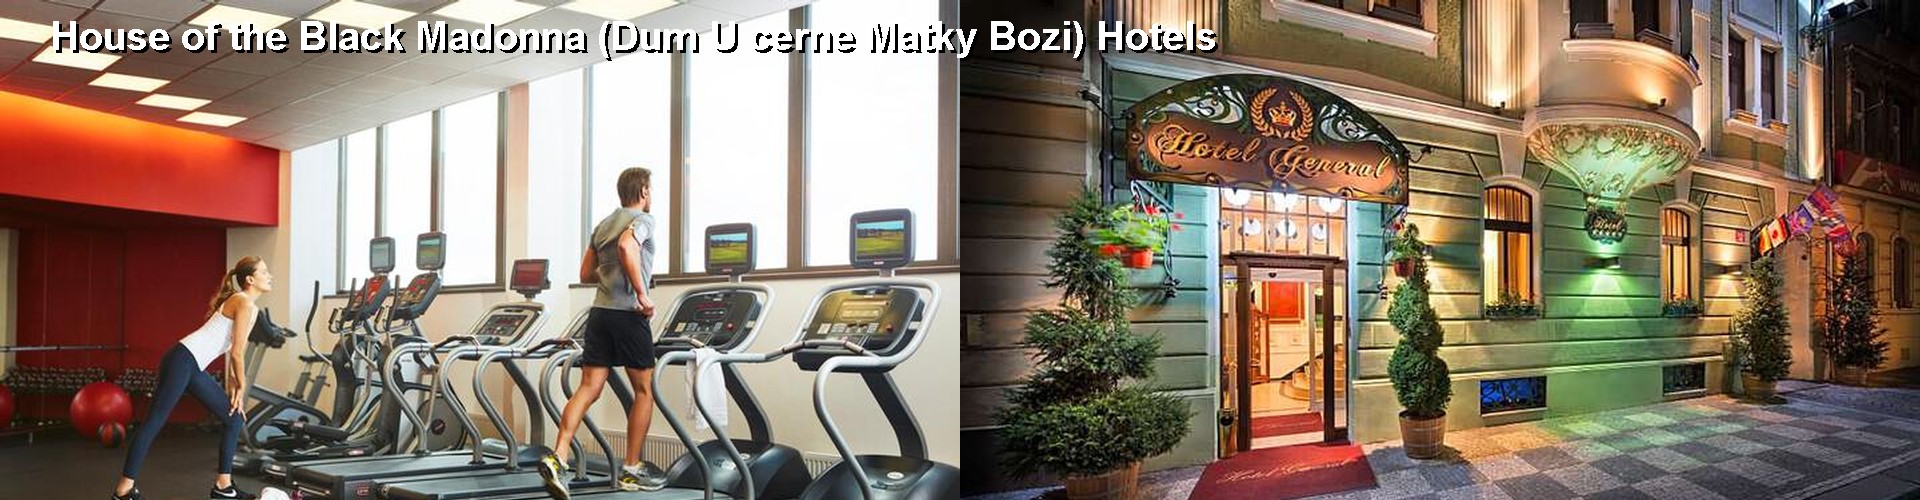 5 Best Hotels near House of the Black Madonna (Dum U cerne Matky Bozi)